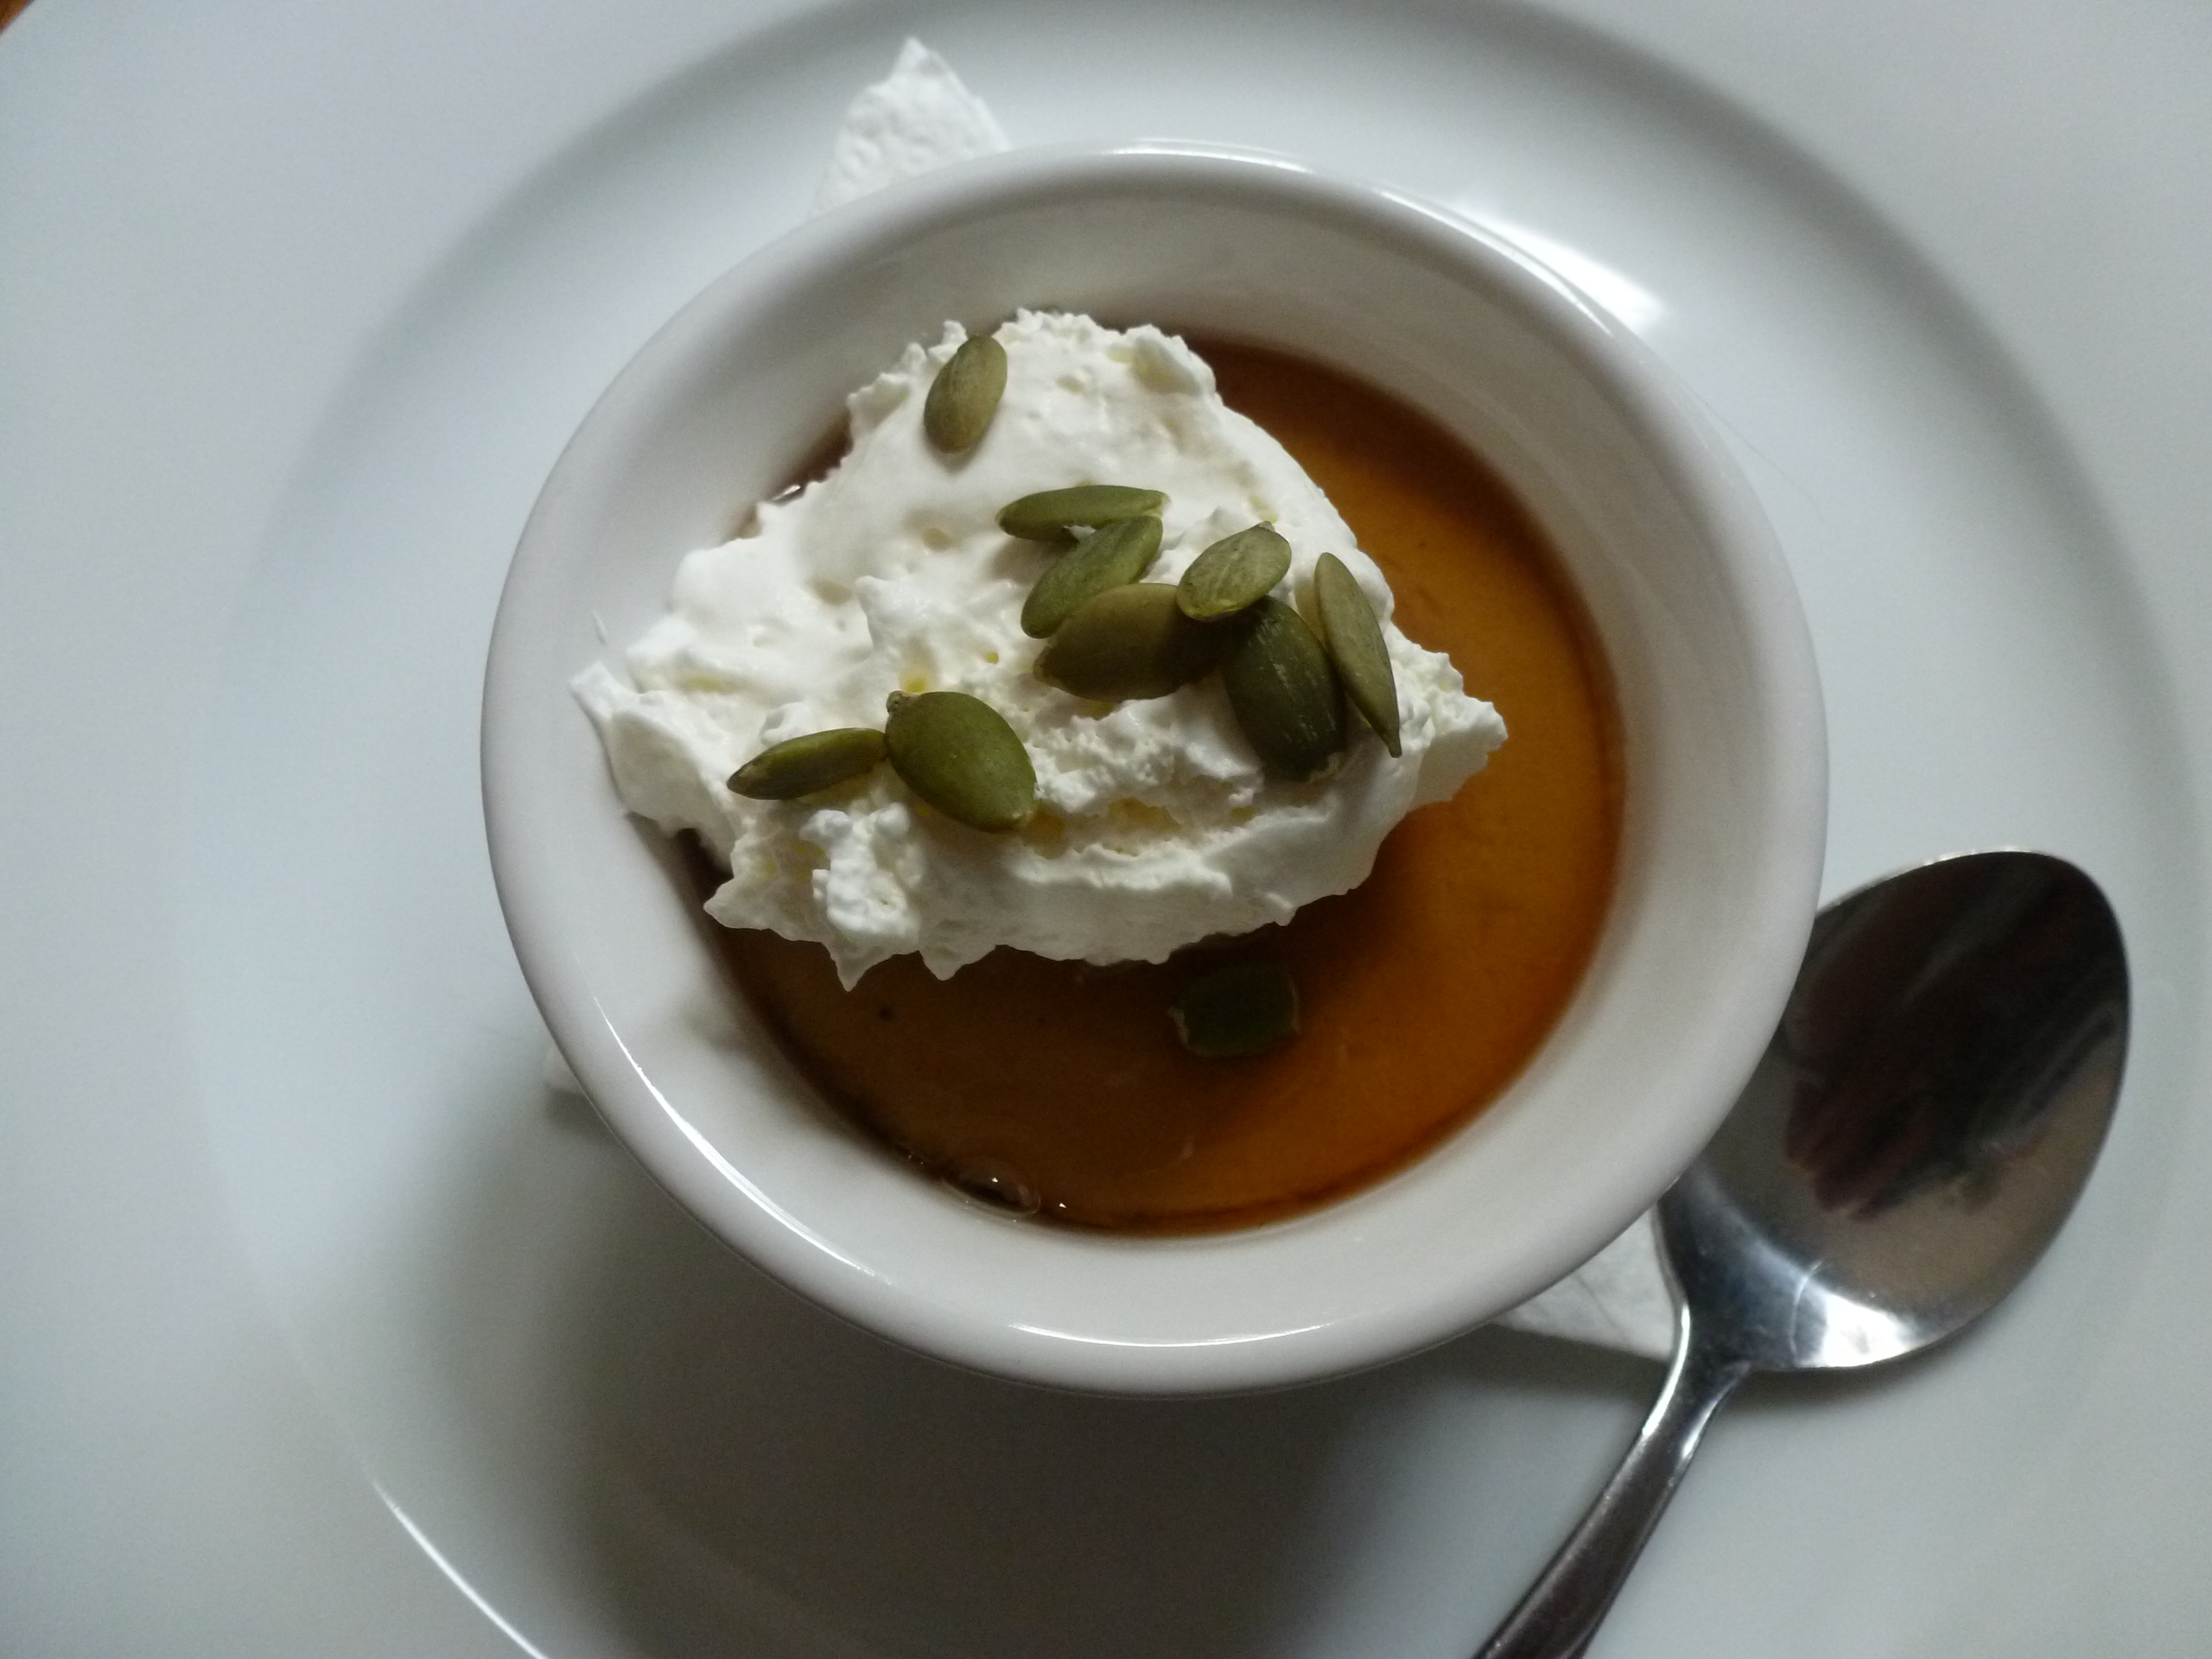 Pumpkin custard, baked into a ramekin, served with whipped cream, maple syrup, and pumpkin seeds